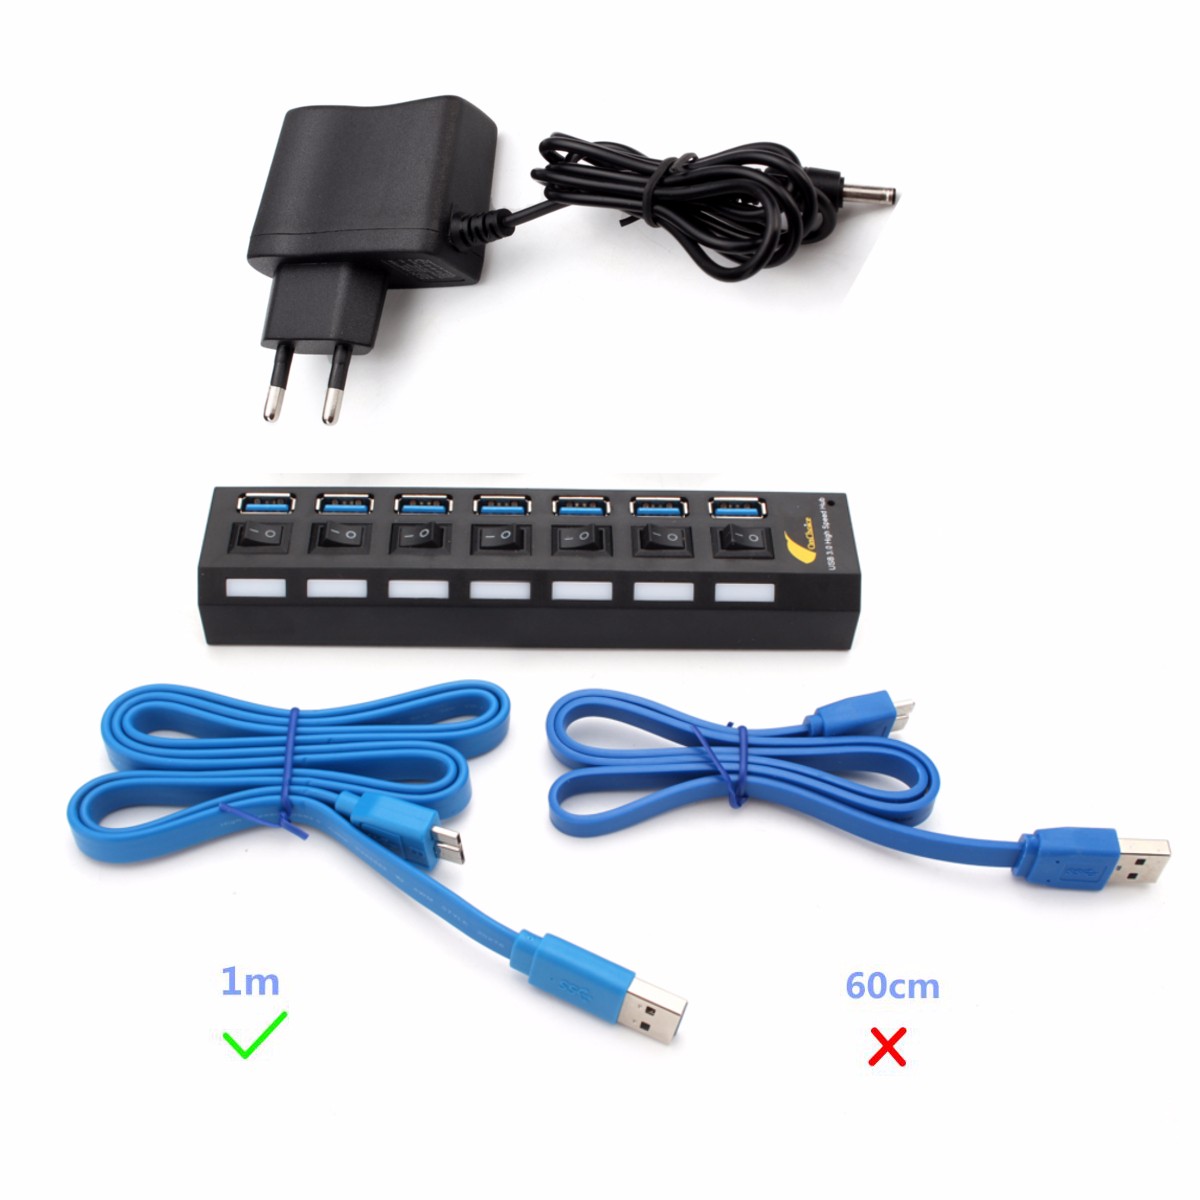 ONCHOICE 7Port USB 3.0 Hub On/Off Switch EU US UK AC Power Adapter For Laptop Desktop 5